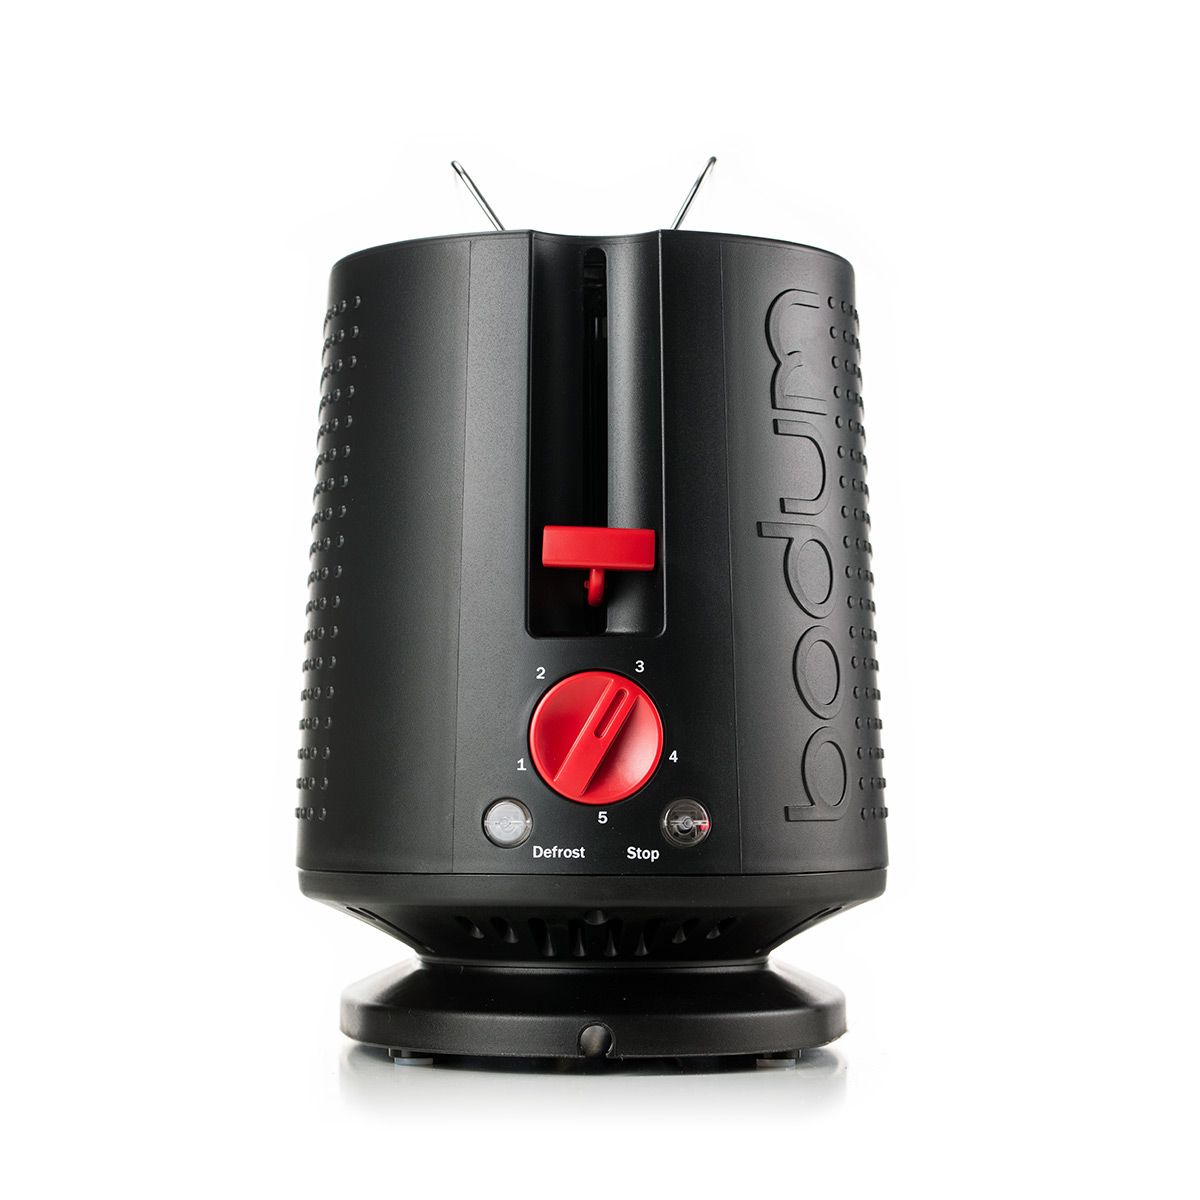 Bodum Bistro Electric Toaster 940 W, zwart